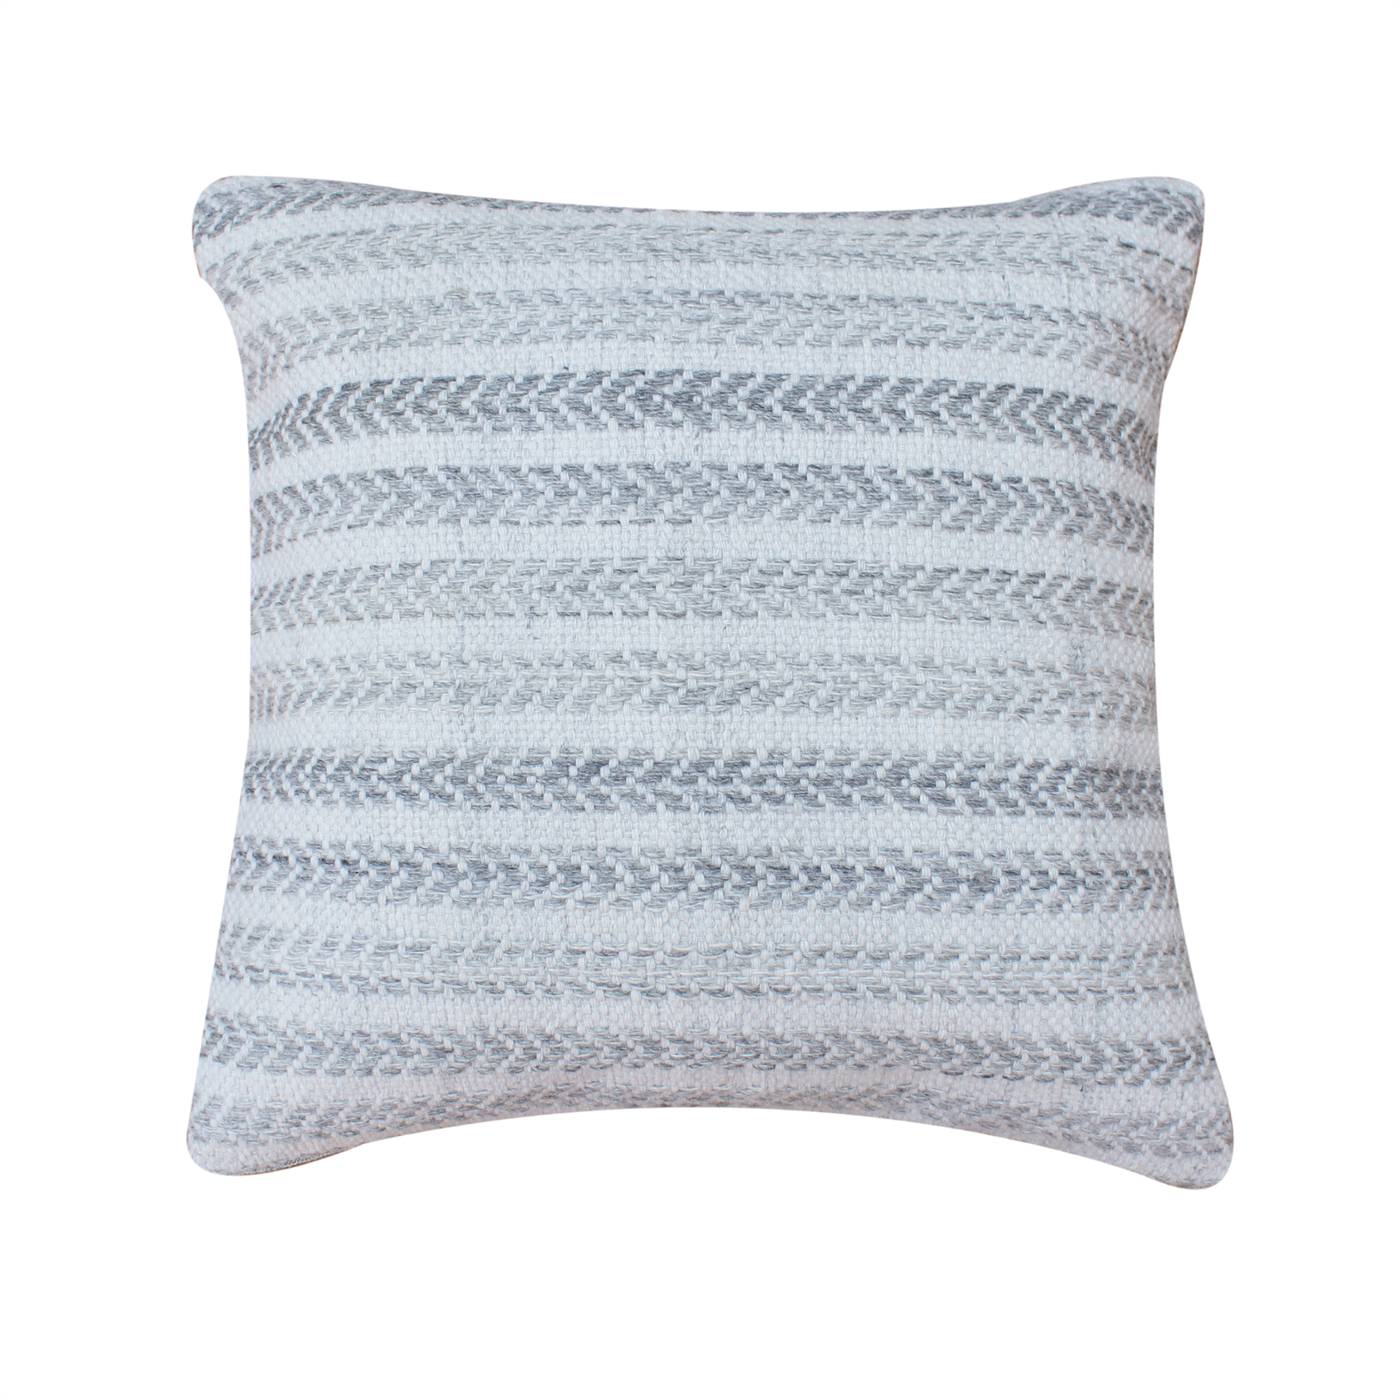 Campina Cushion, 56x56 cm, Grey, PET, Hand Woven, Pitloom, Flat Weave